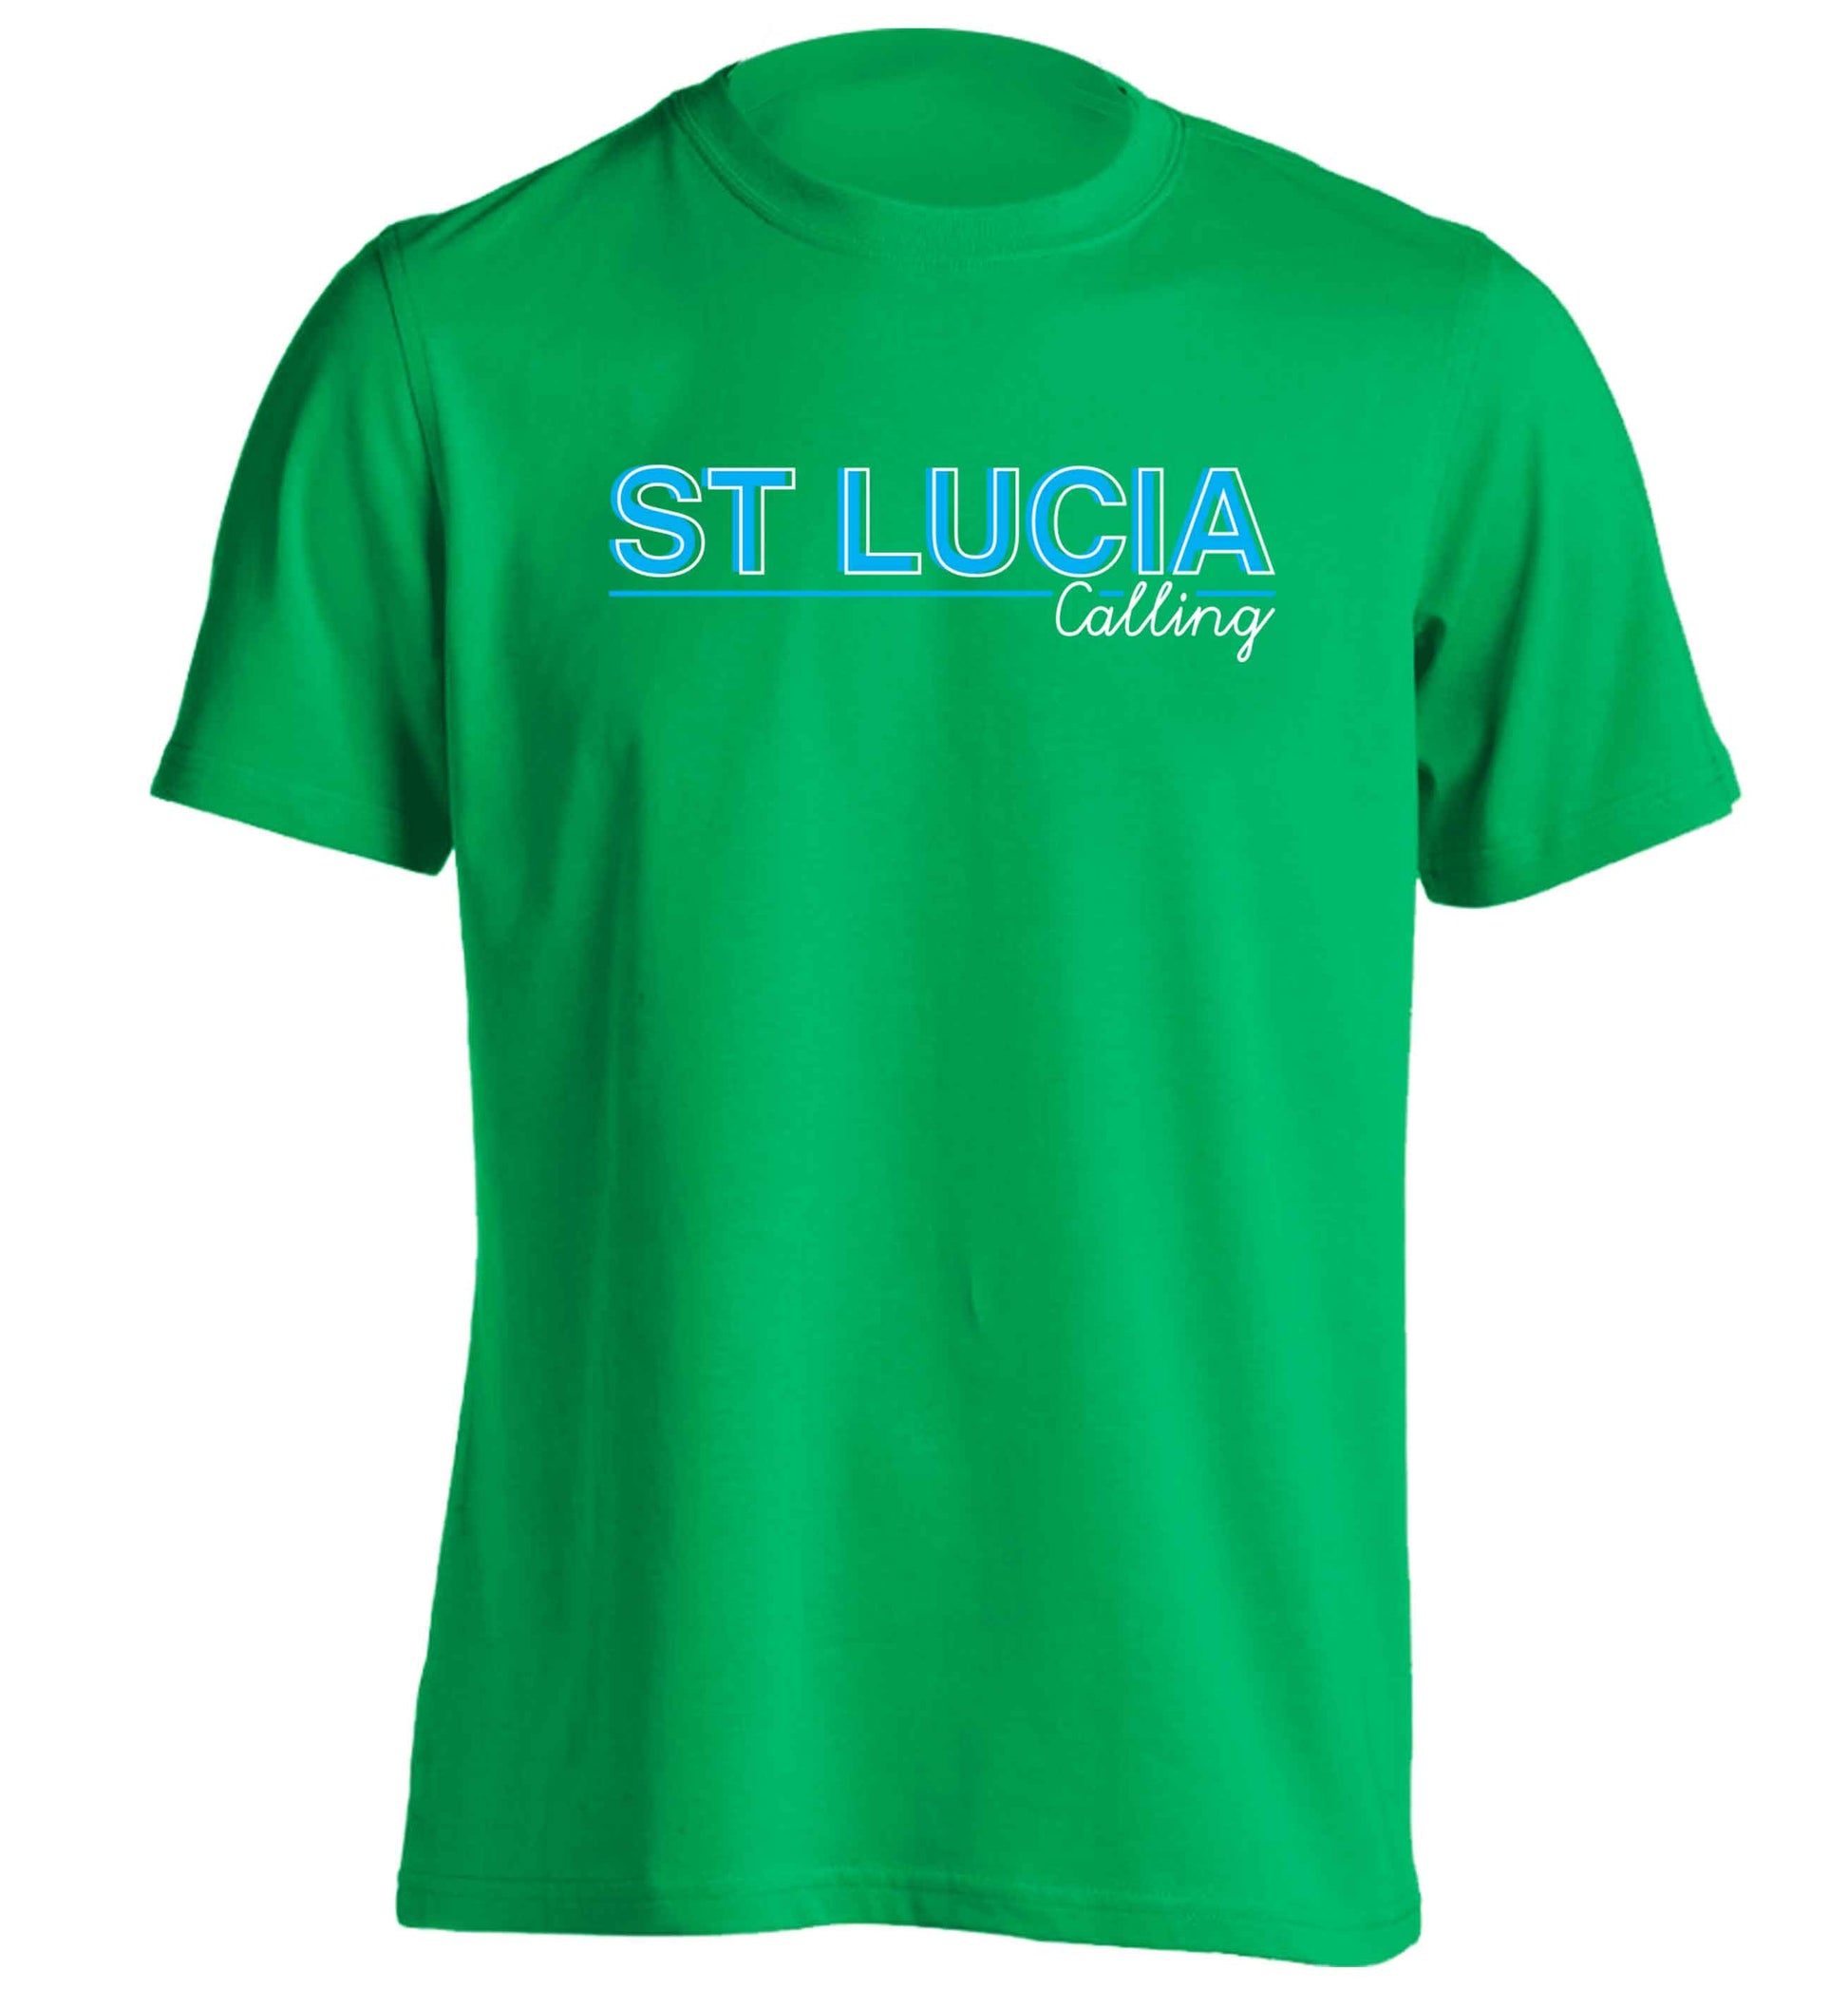 St Lucia calling adults unisex green Tshirt 2XL